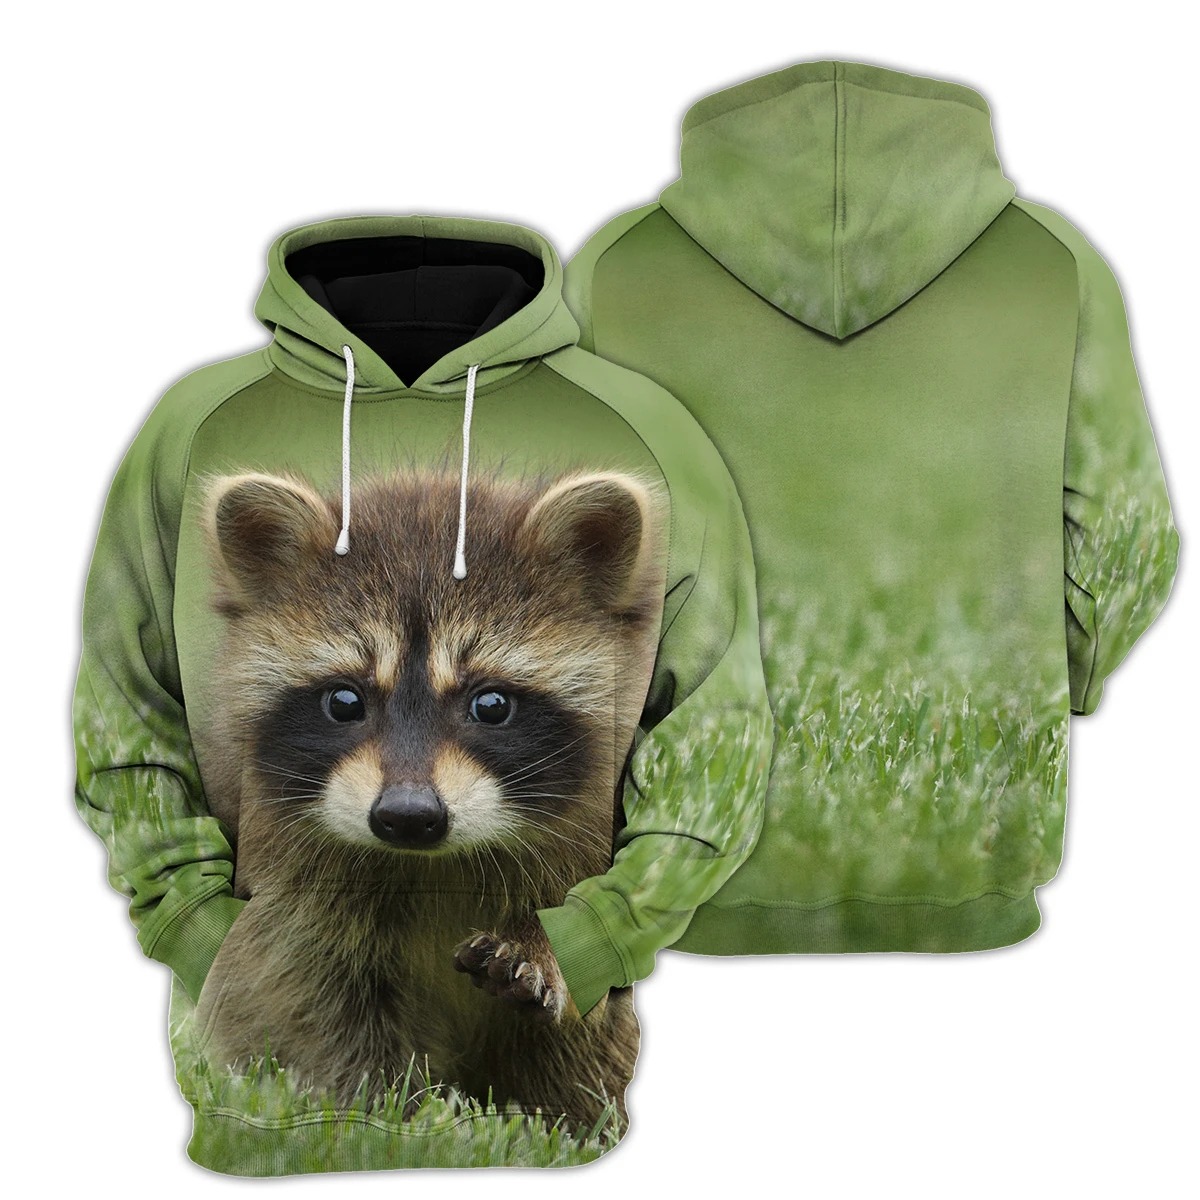 Raccoon 3d All Over Printed hoodie, shirt